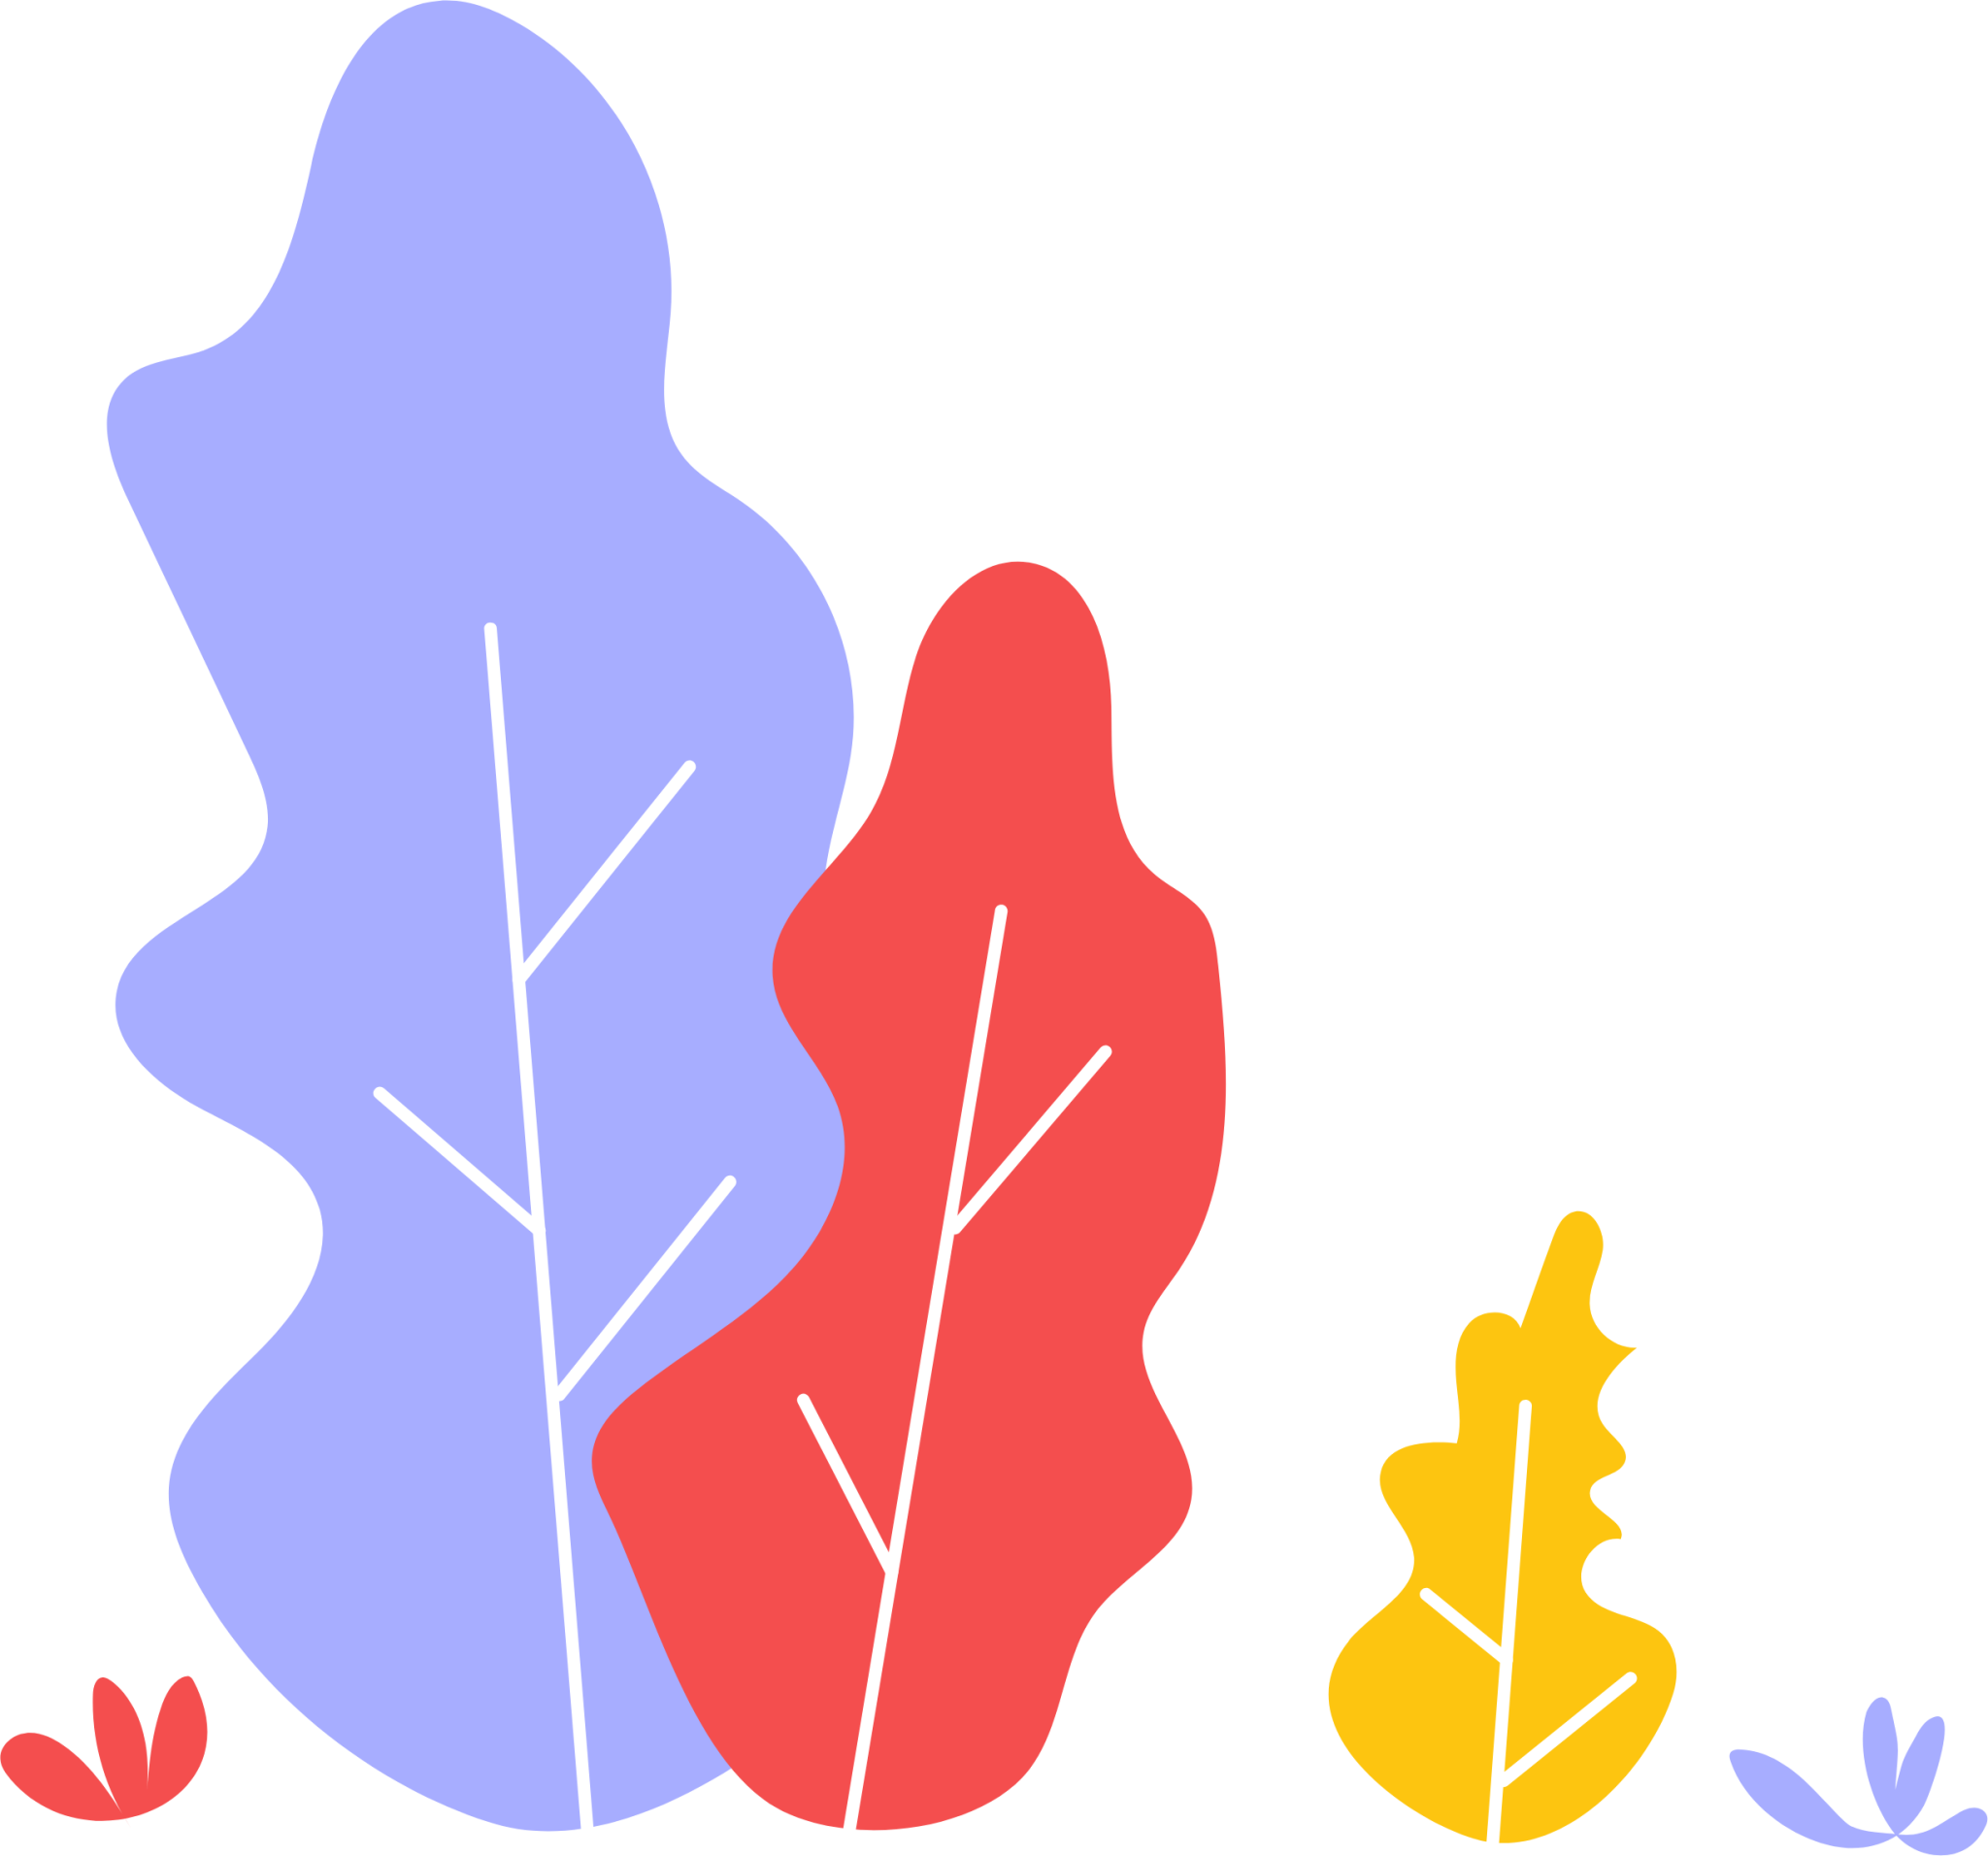 Plant 1 illustration